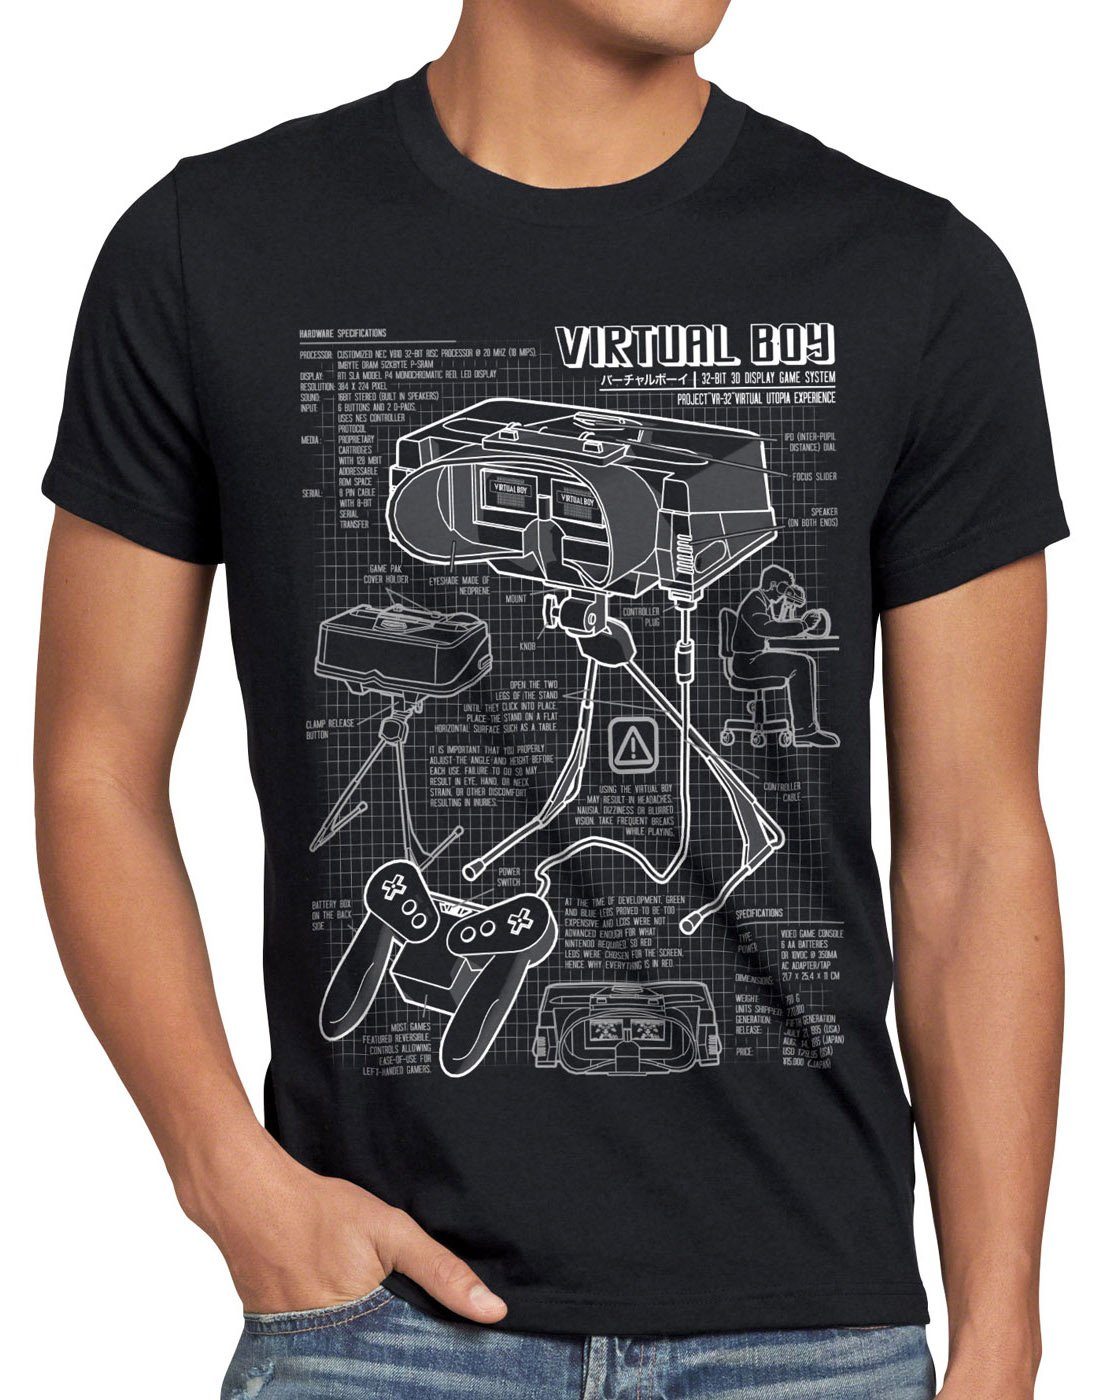 style3 Print-Shirt Herren T-Shirt super nintendo konsole schwarz n64 Boy nes gamer 32Bit videospiel Virtual